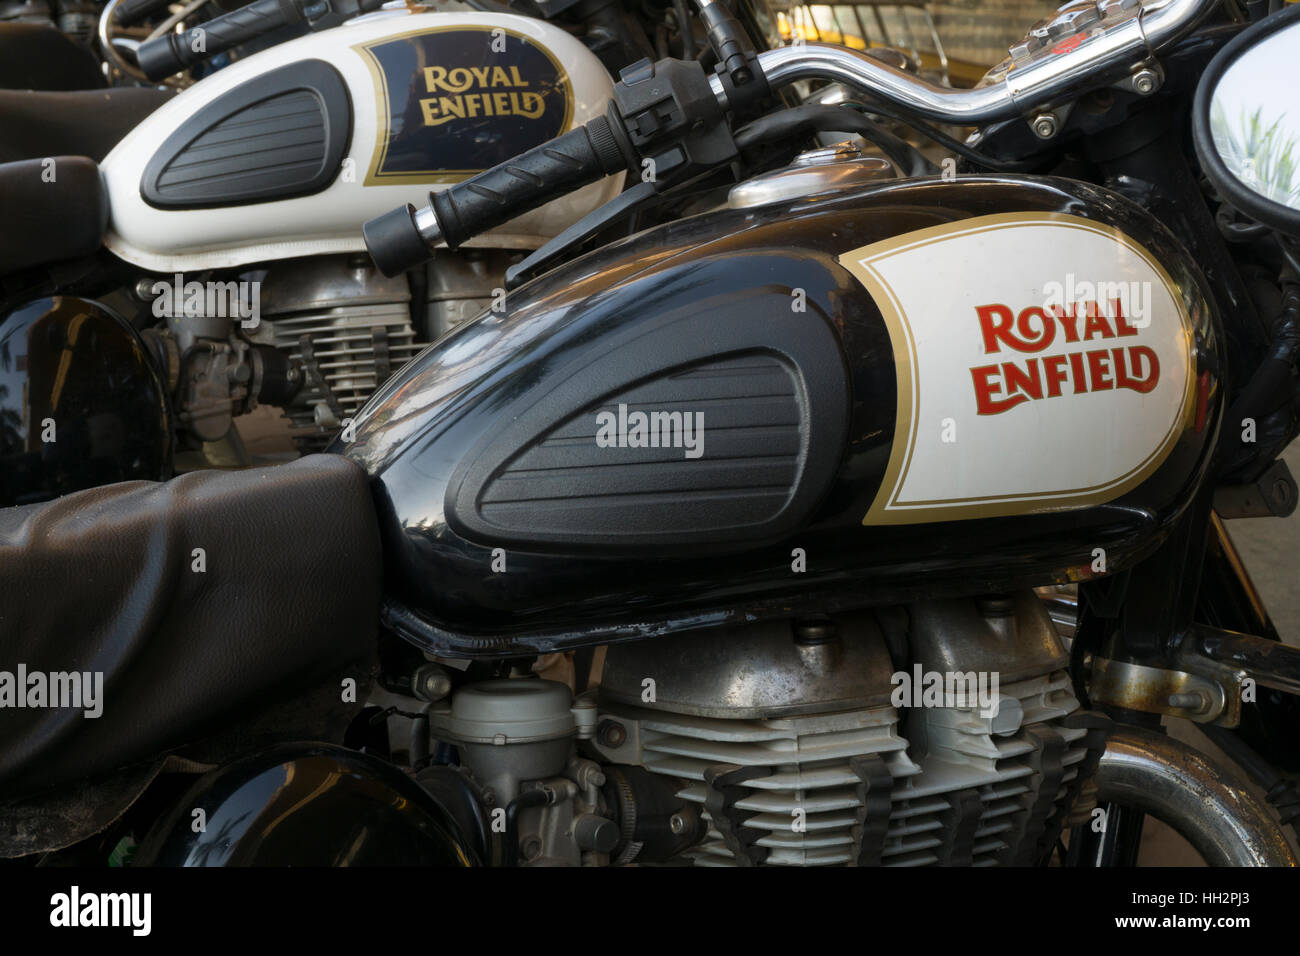 royal enfield motorbikes parked goa motorcycle logo brand Stock Photo